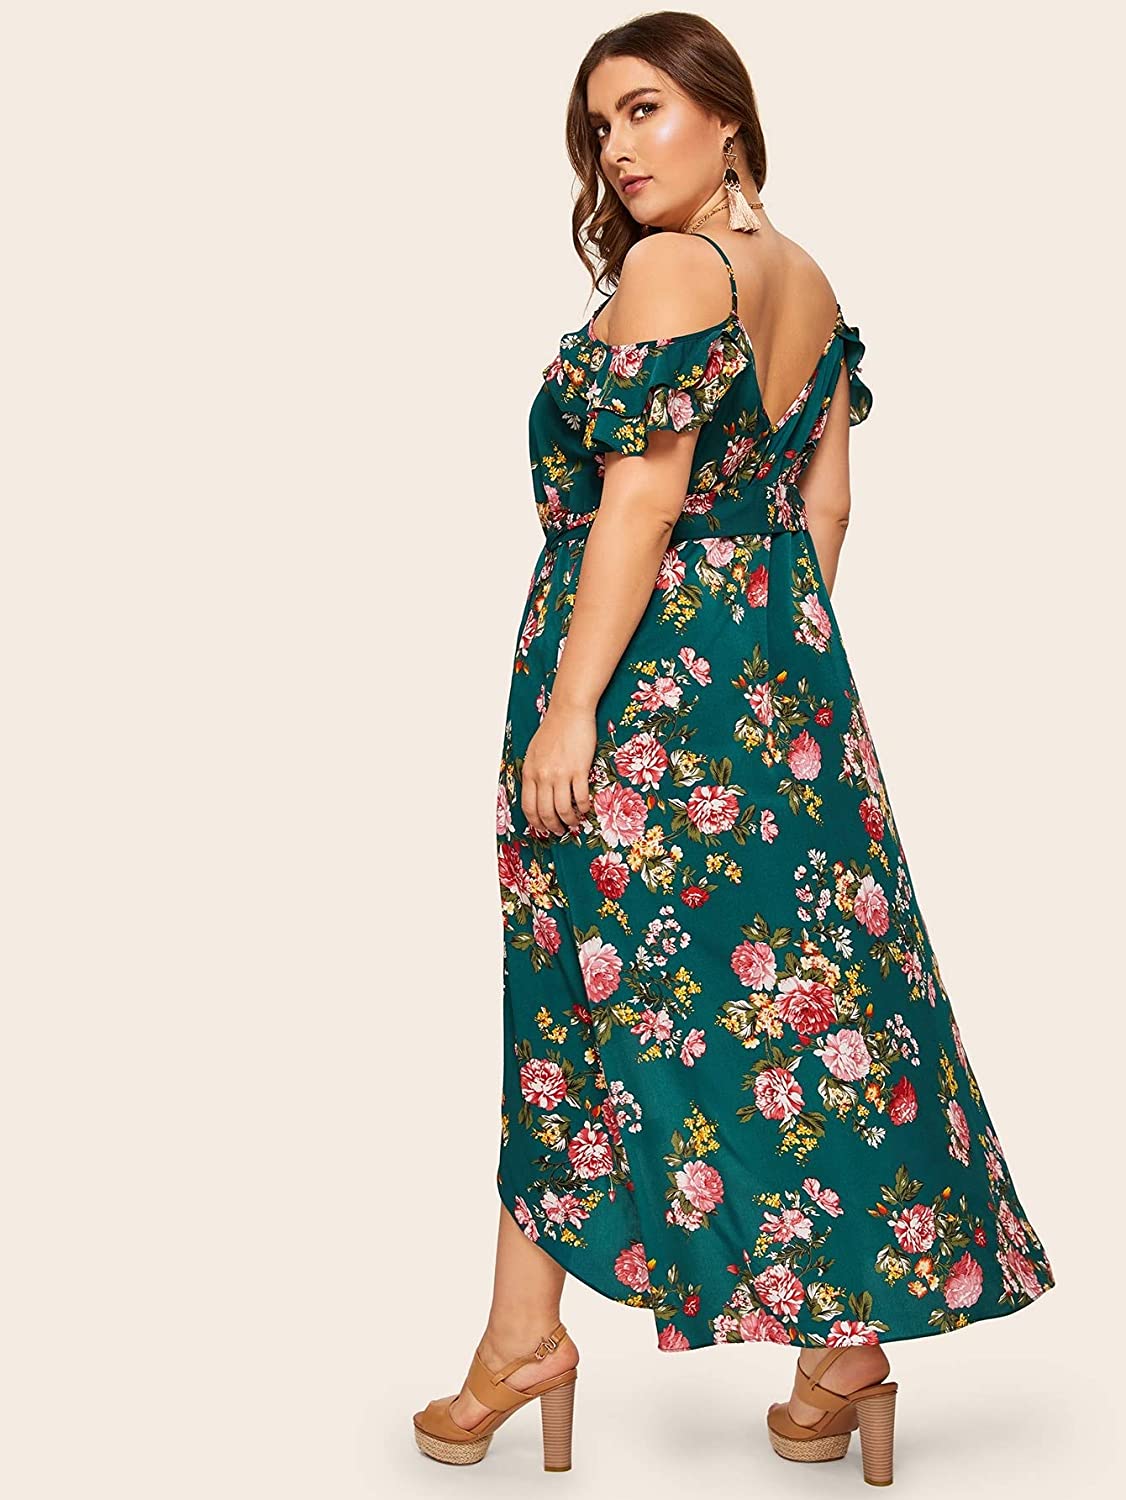 Milumia Women Plus Size Cold Shoulder Boho Floral Dress Split Maxi | eBay